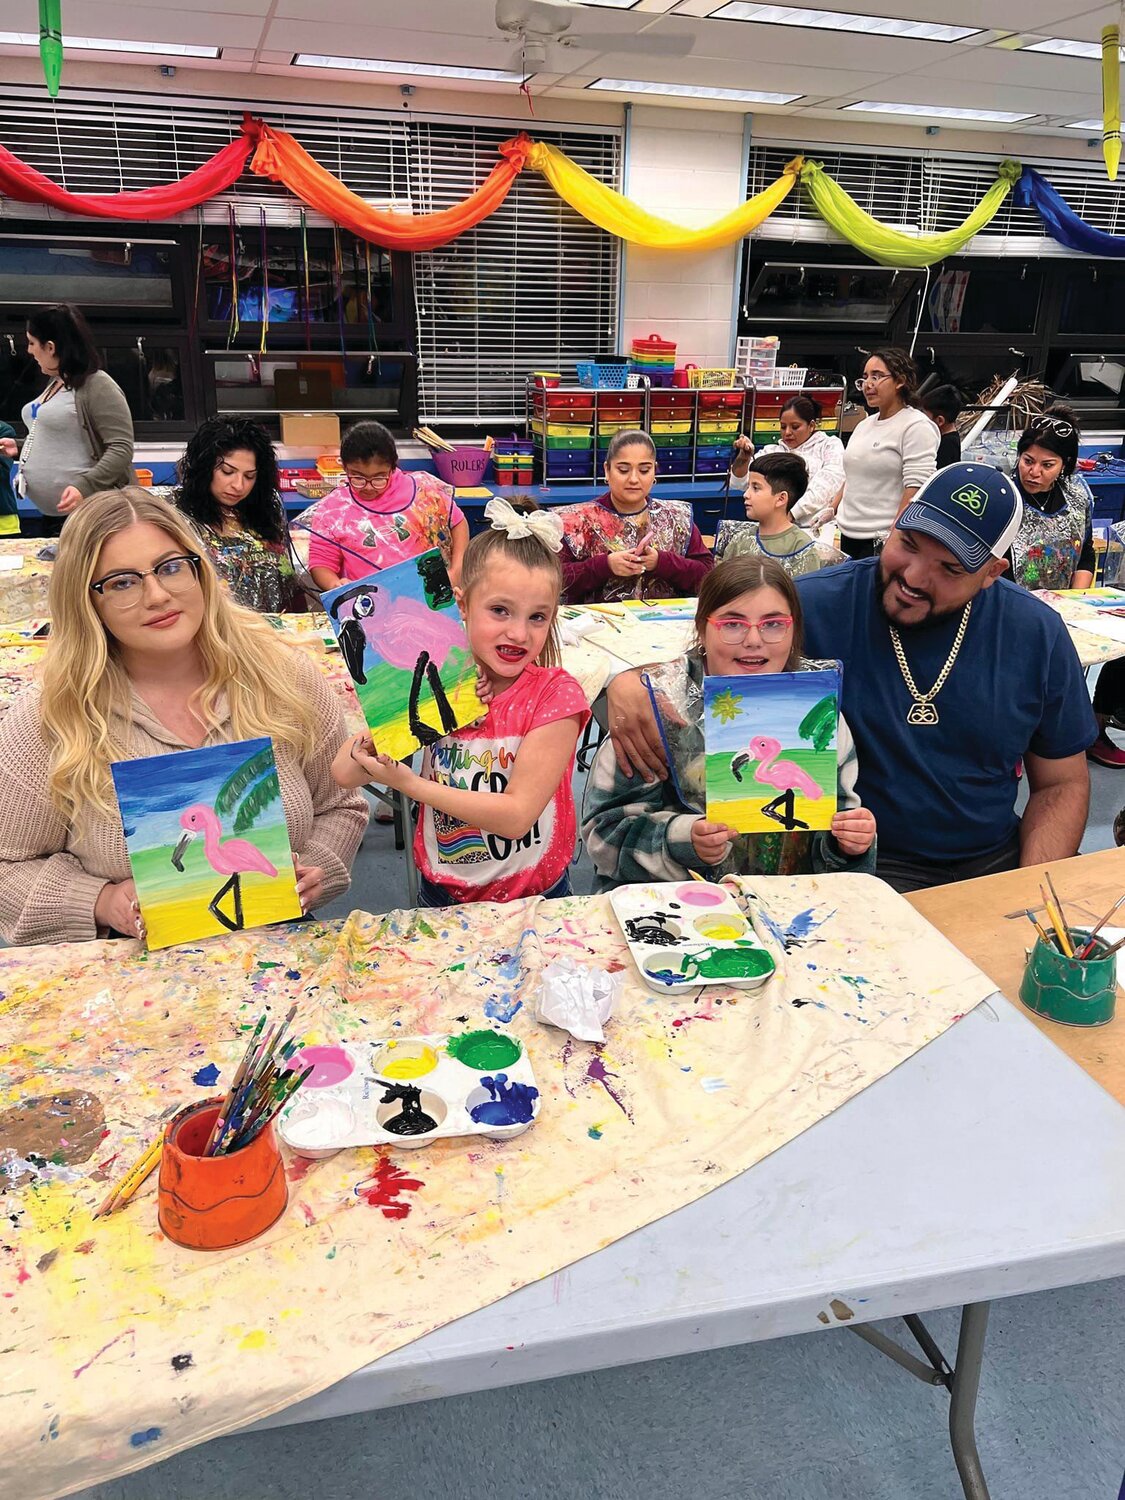 LABELLE -- Country Oaks Elementary School held a family art night to raise money for art programs in the school. [Photo courtesy Country Oaks Elementary School]